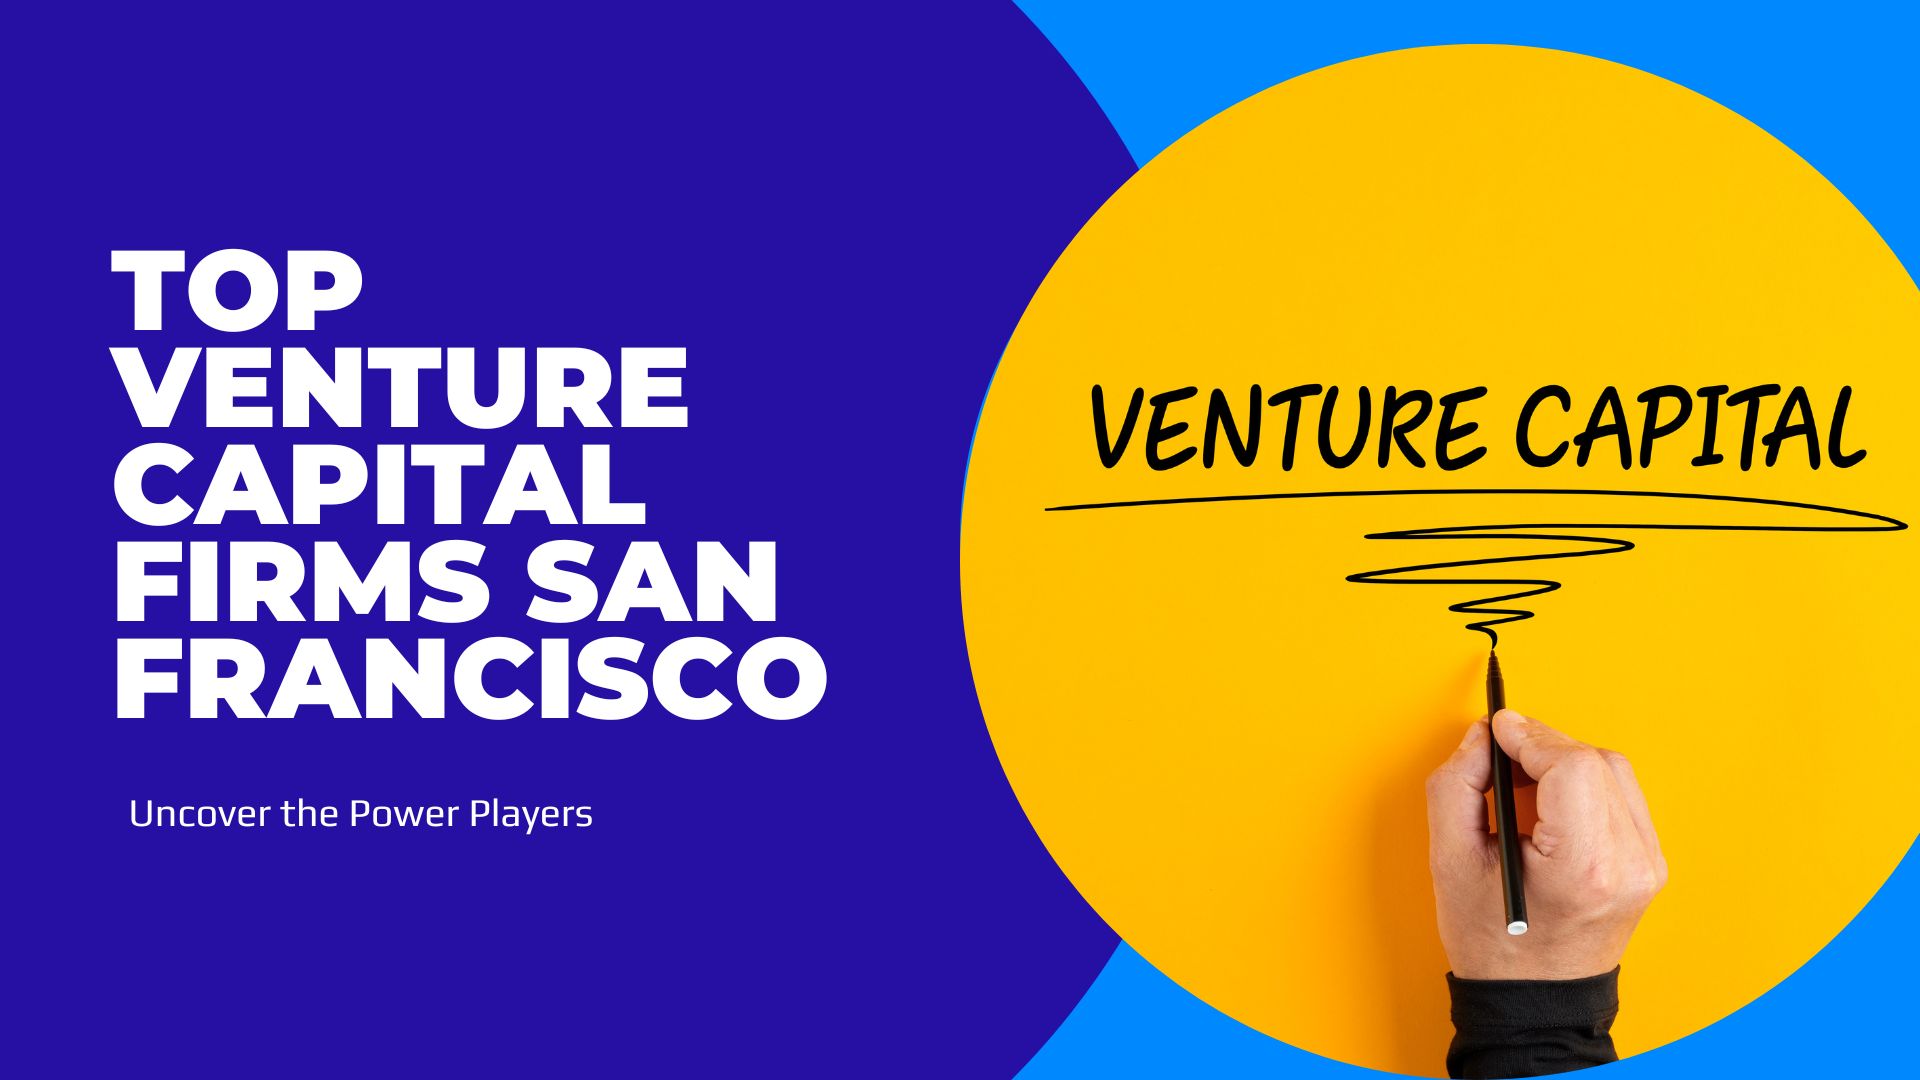 Top Venture Capital Firms San Francisco